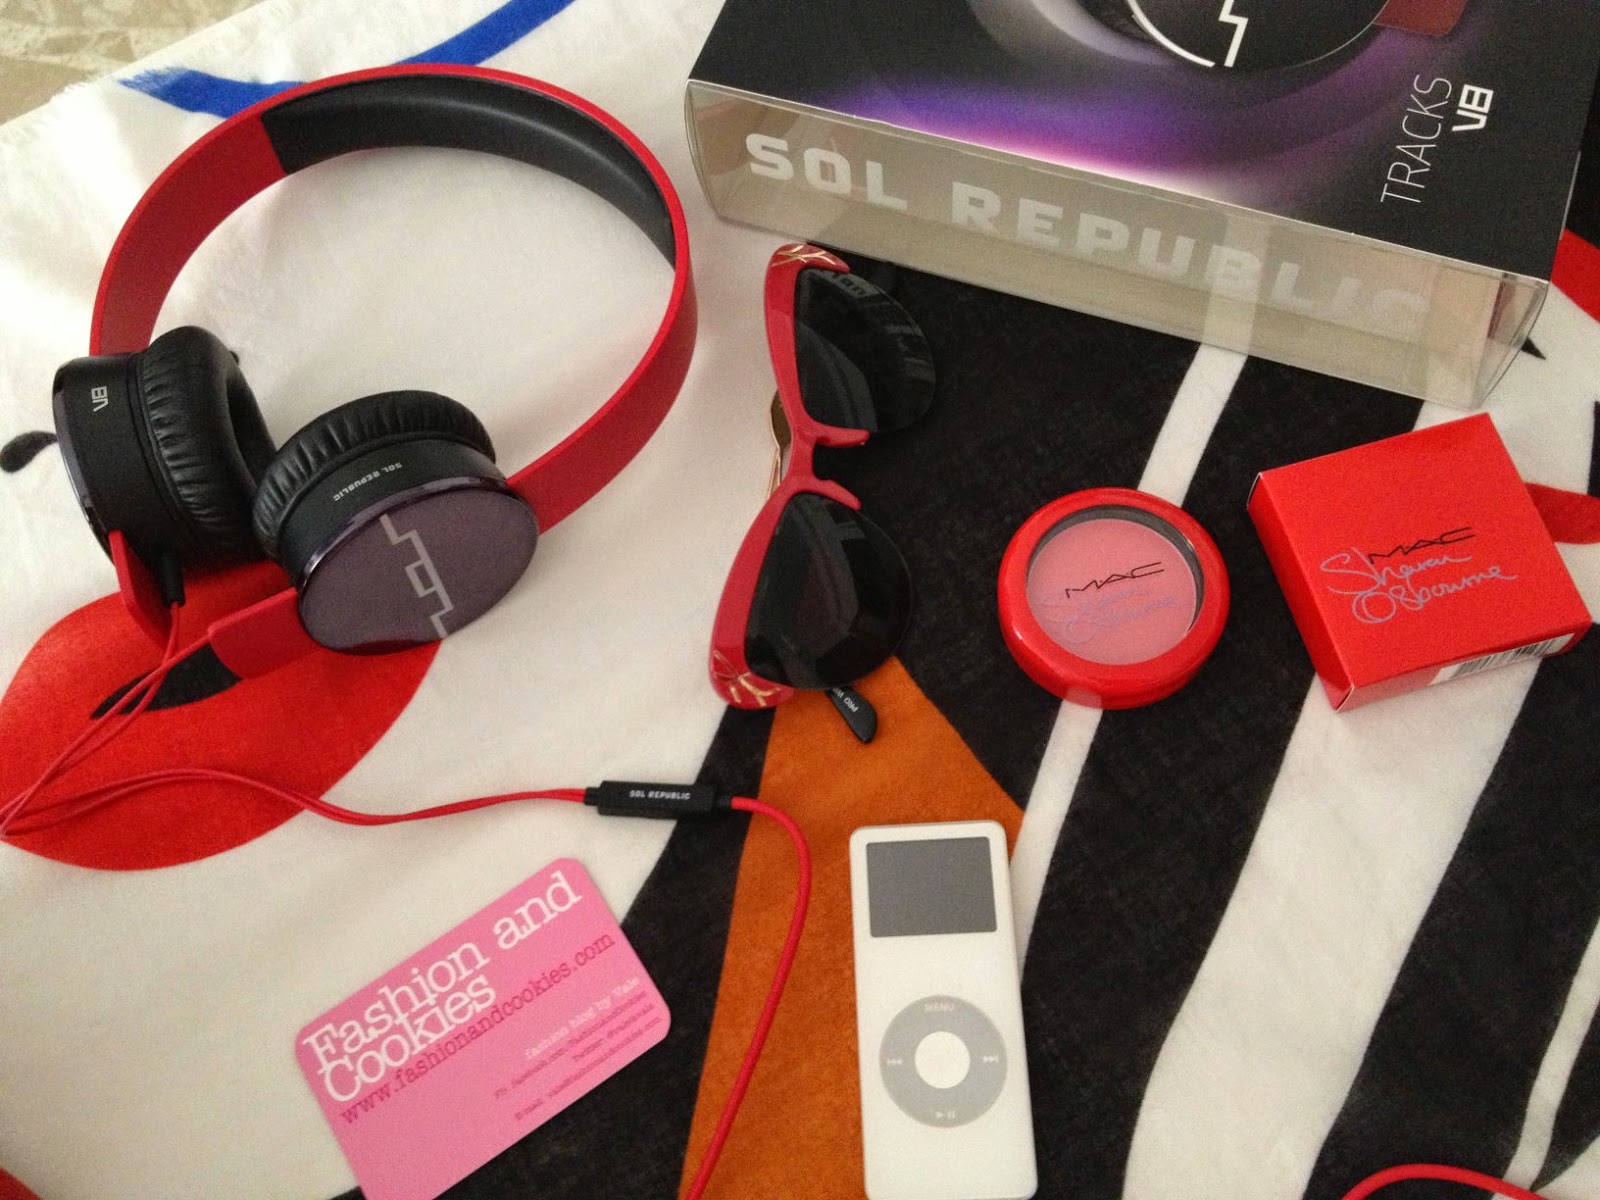 sol republic headphones, red spitfire sunglasses, mac peaches and cream blush, mac sharon osbourne blush, Fashion and Cookies, fashion blogger